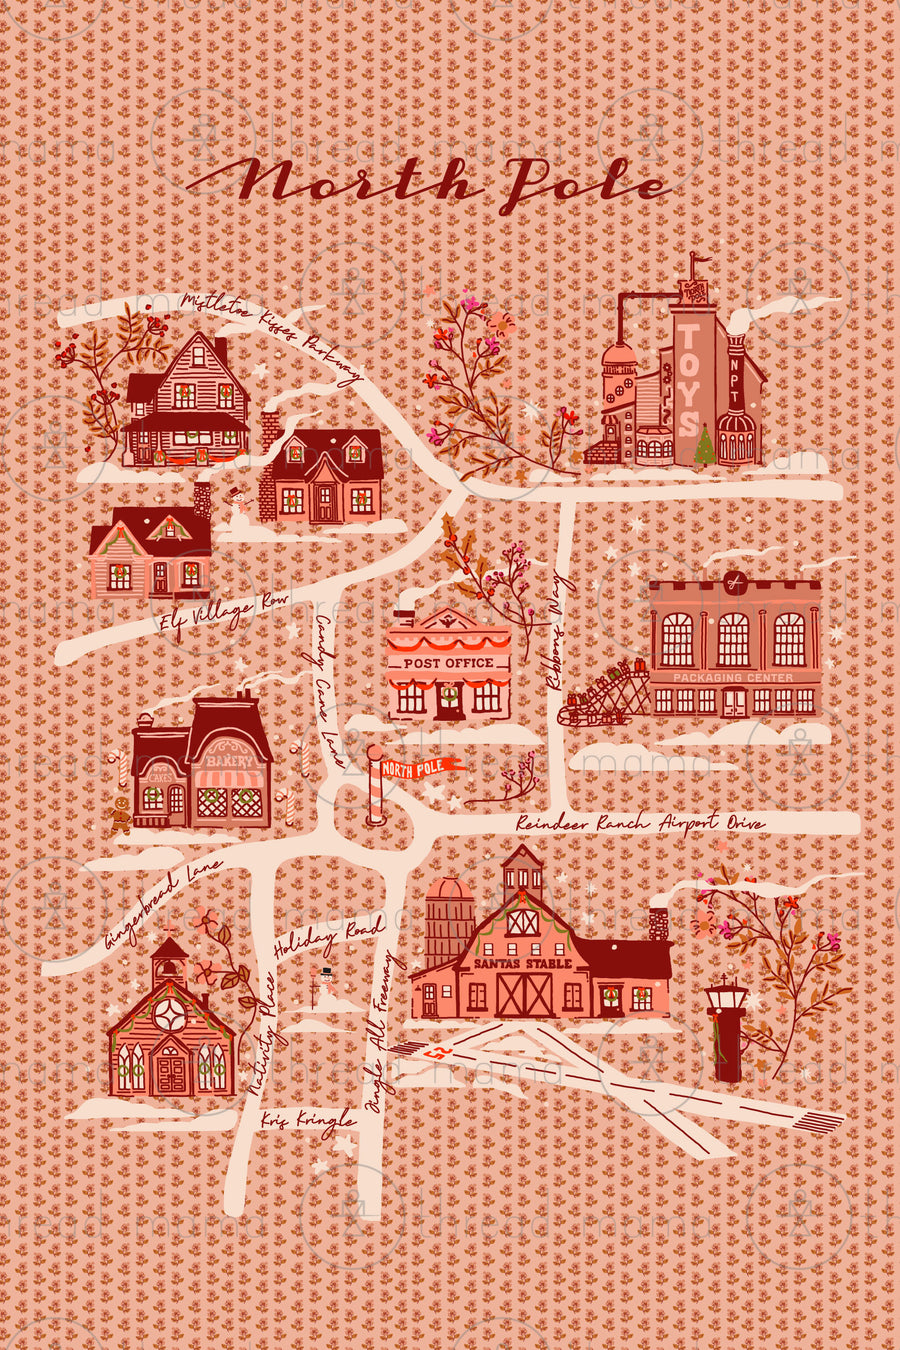 North Pole Village - Set